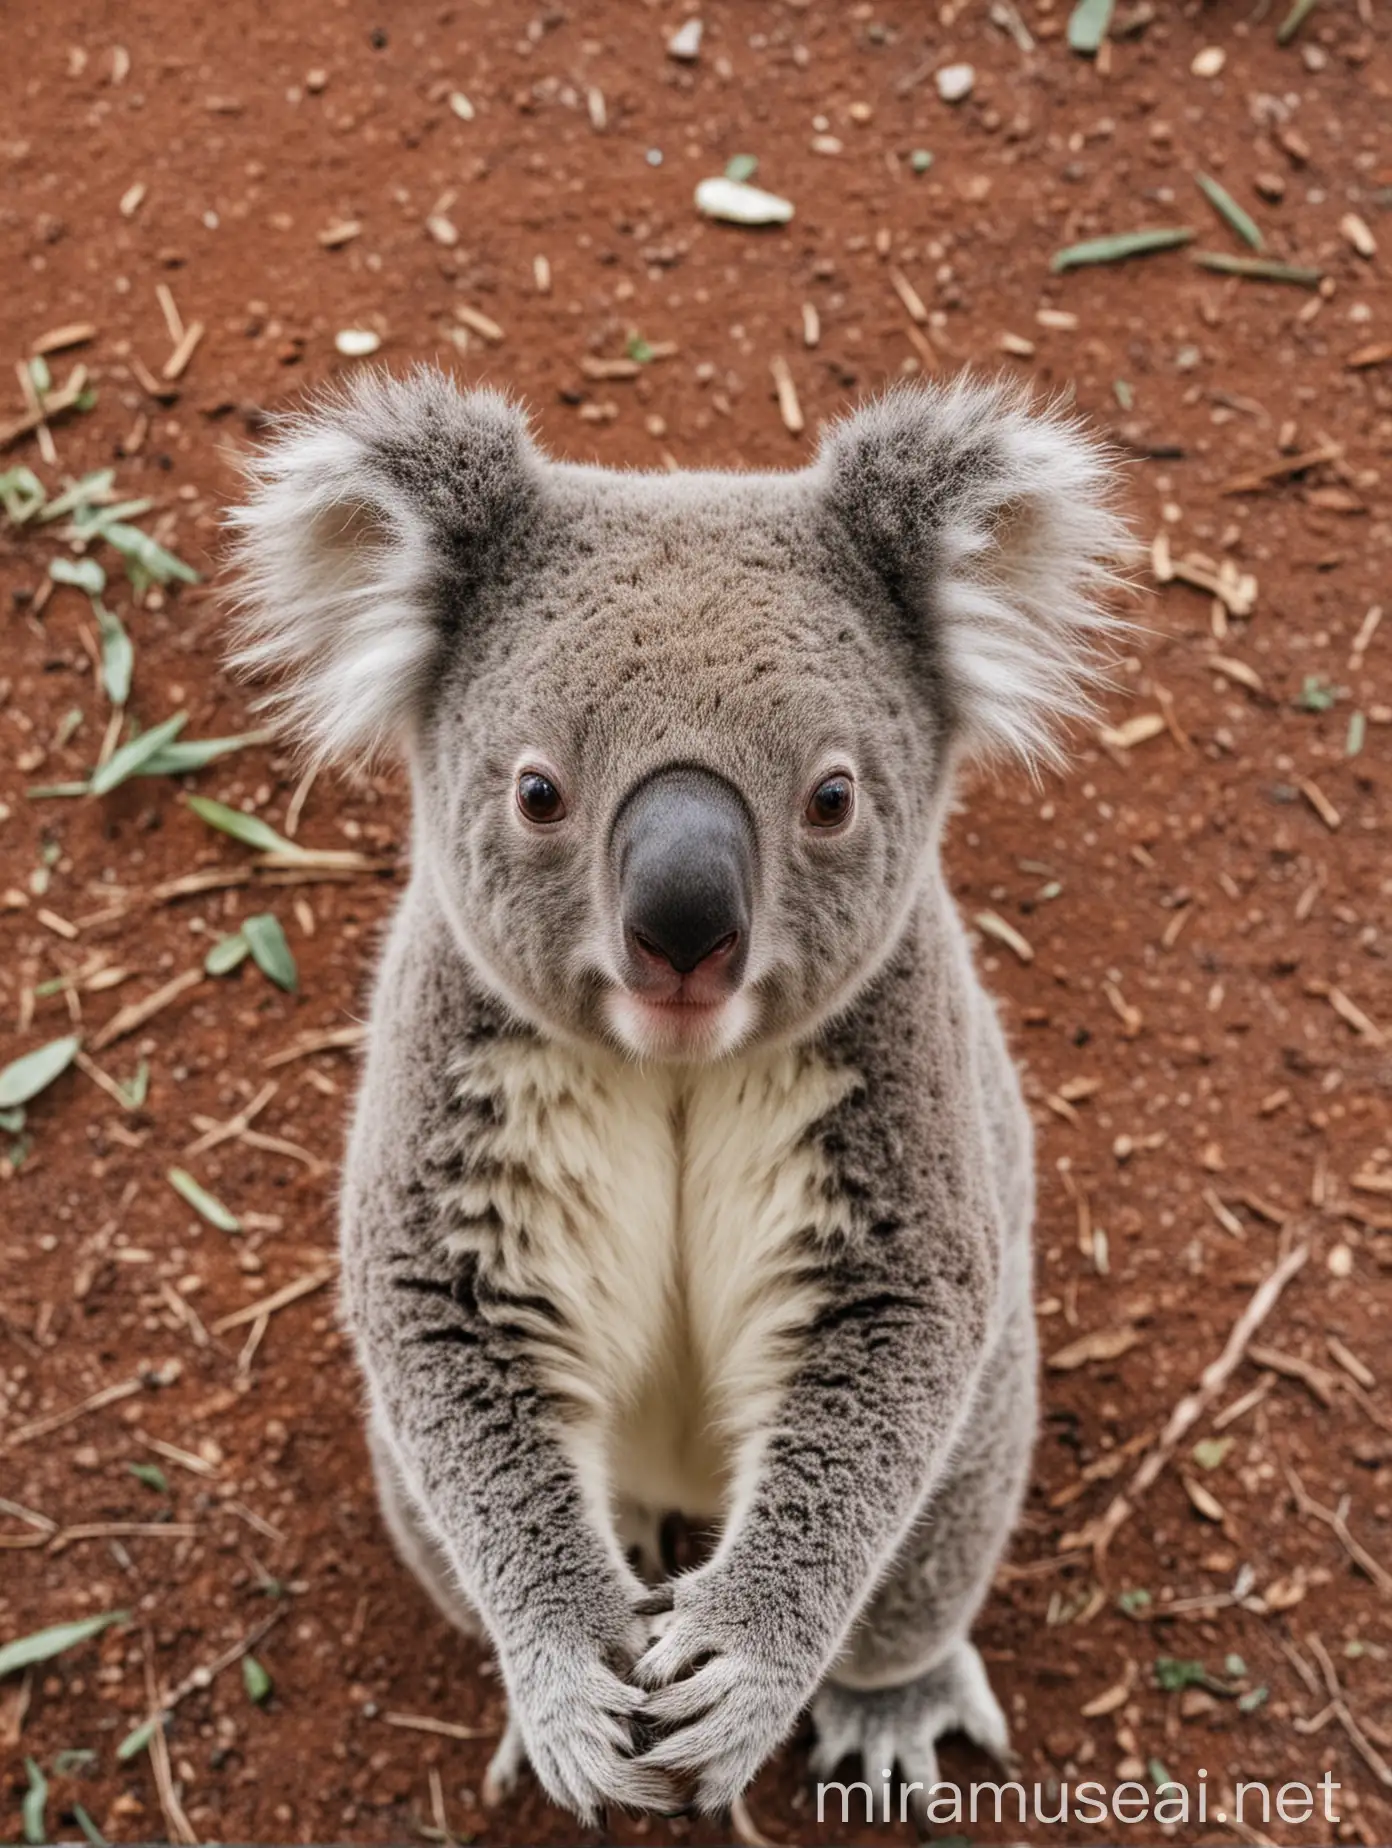 Koala on Ground Looking into camera 